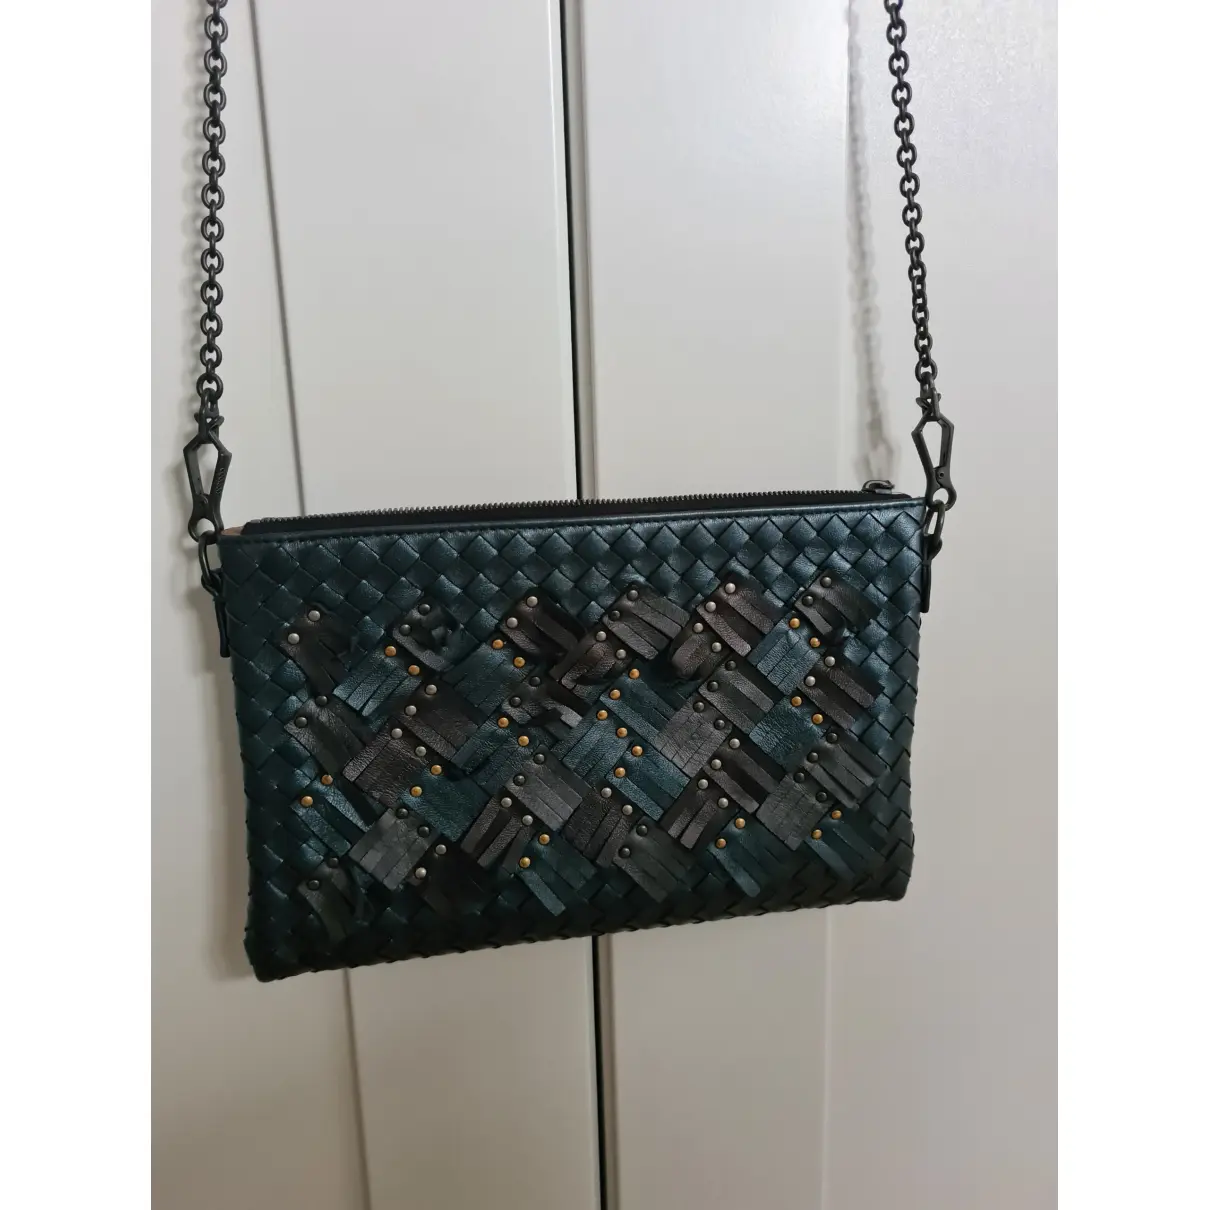 Buy Bottega Veneta Nodini leather handbag online